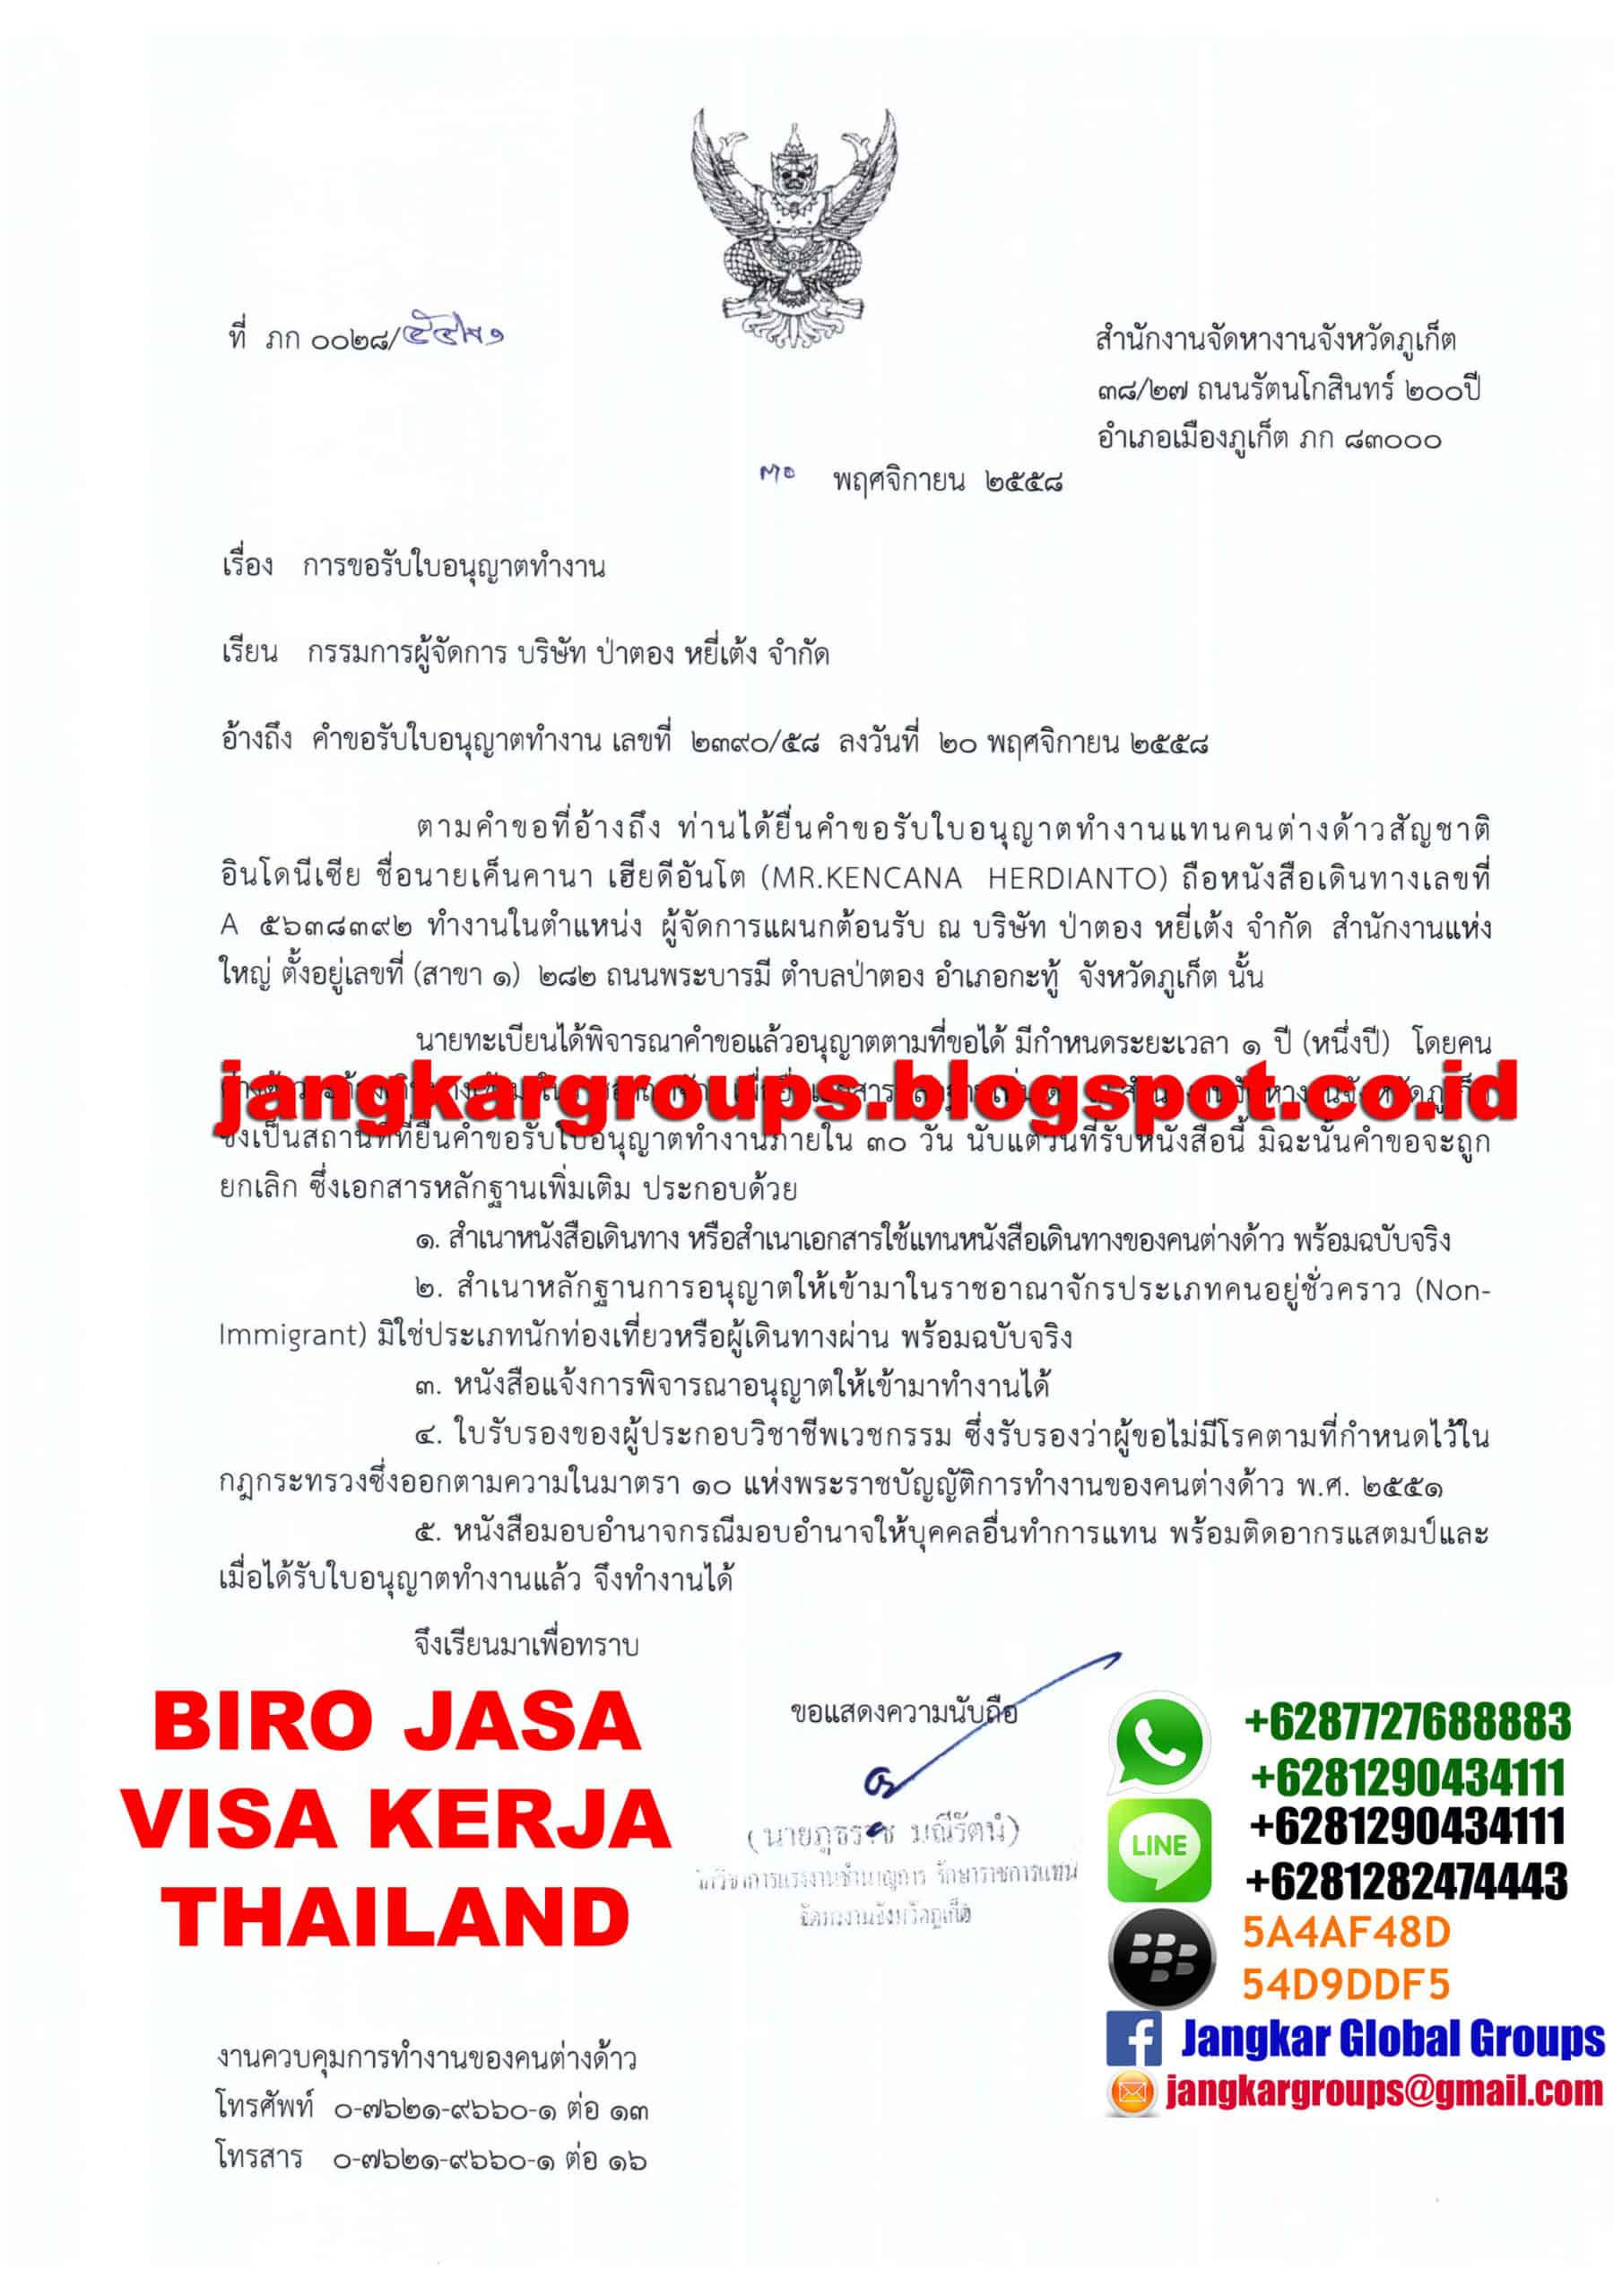 jasa visa kerja wp3 thailand